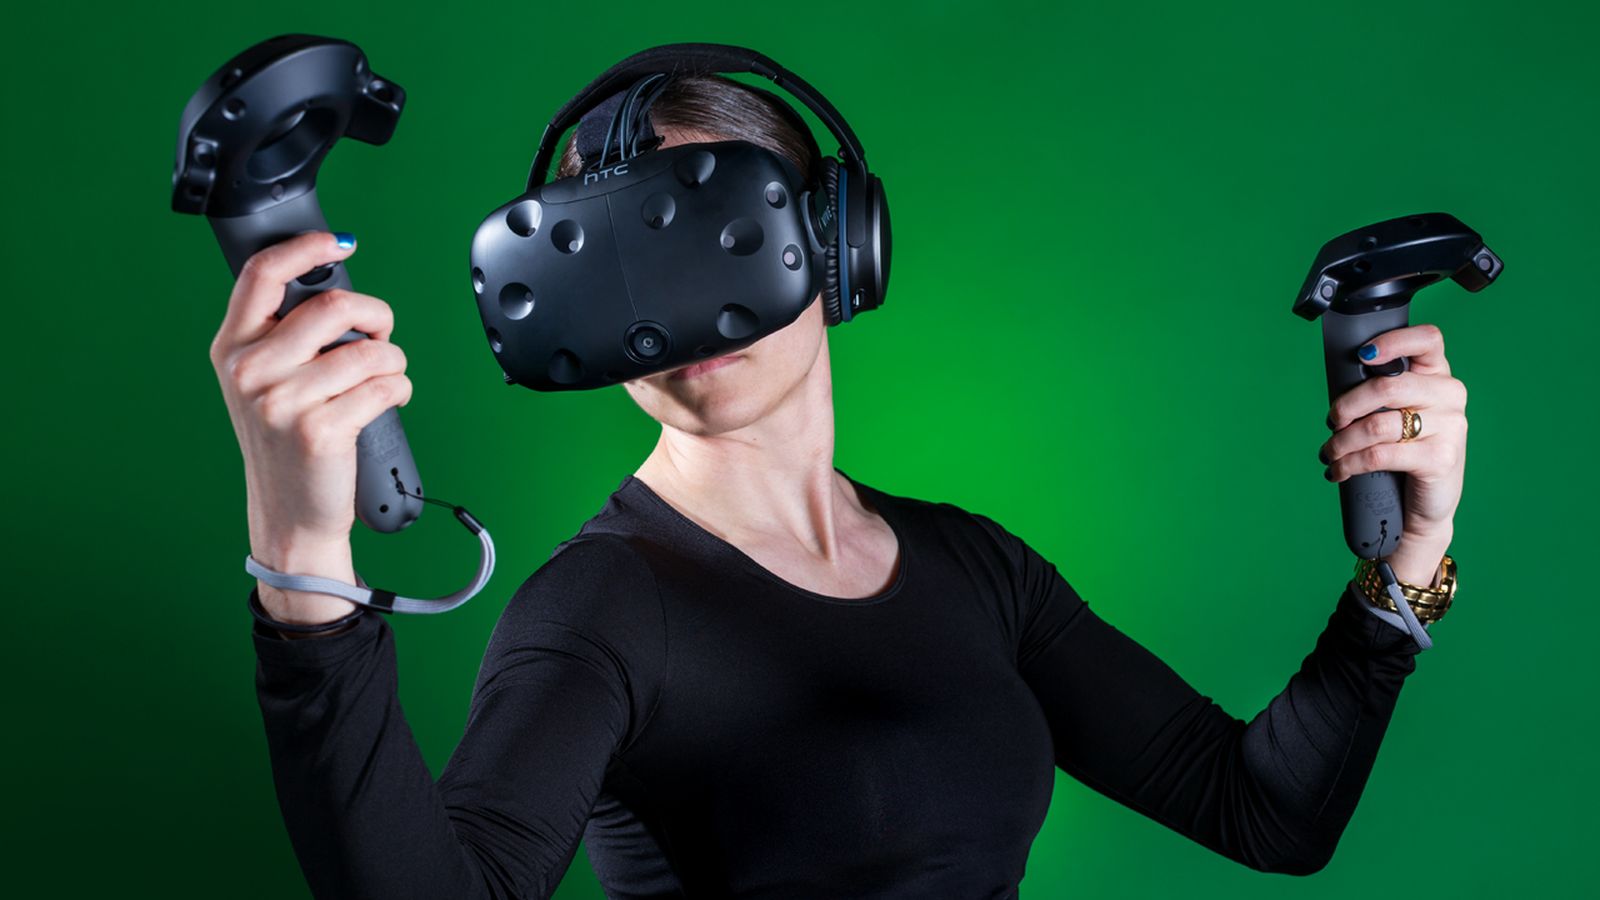 HTC Vive VR device